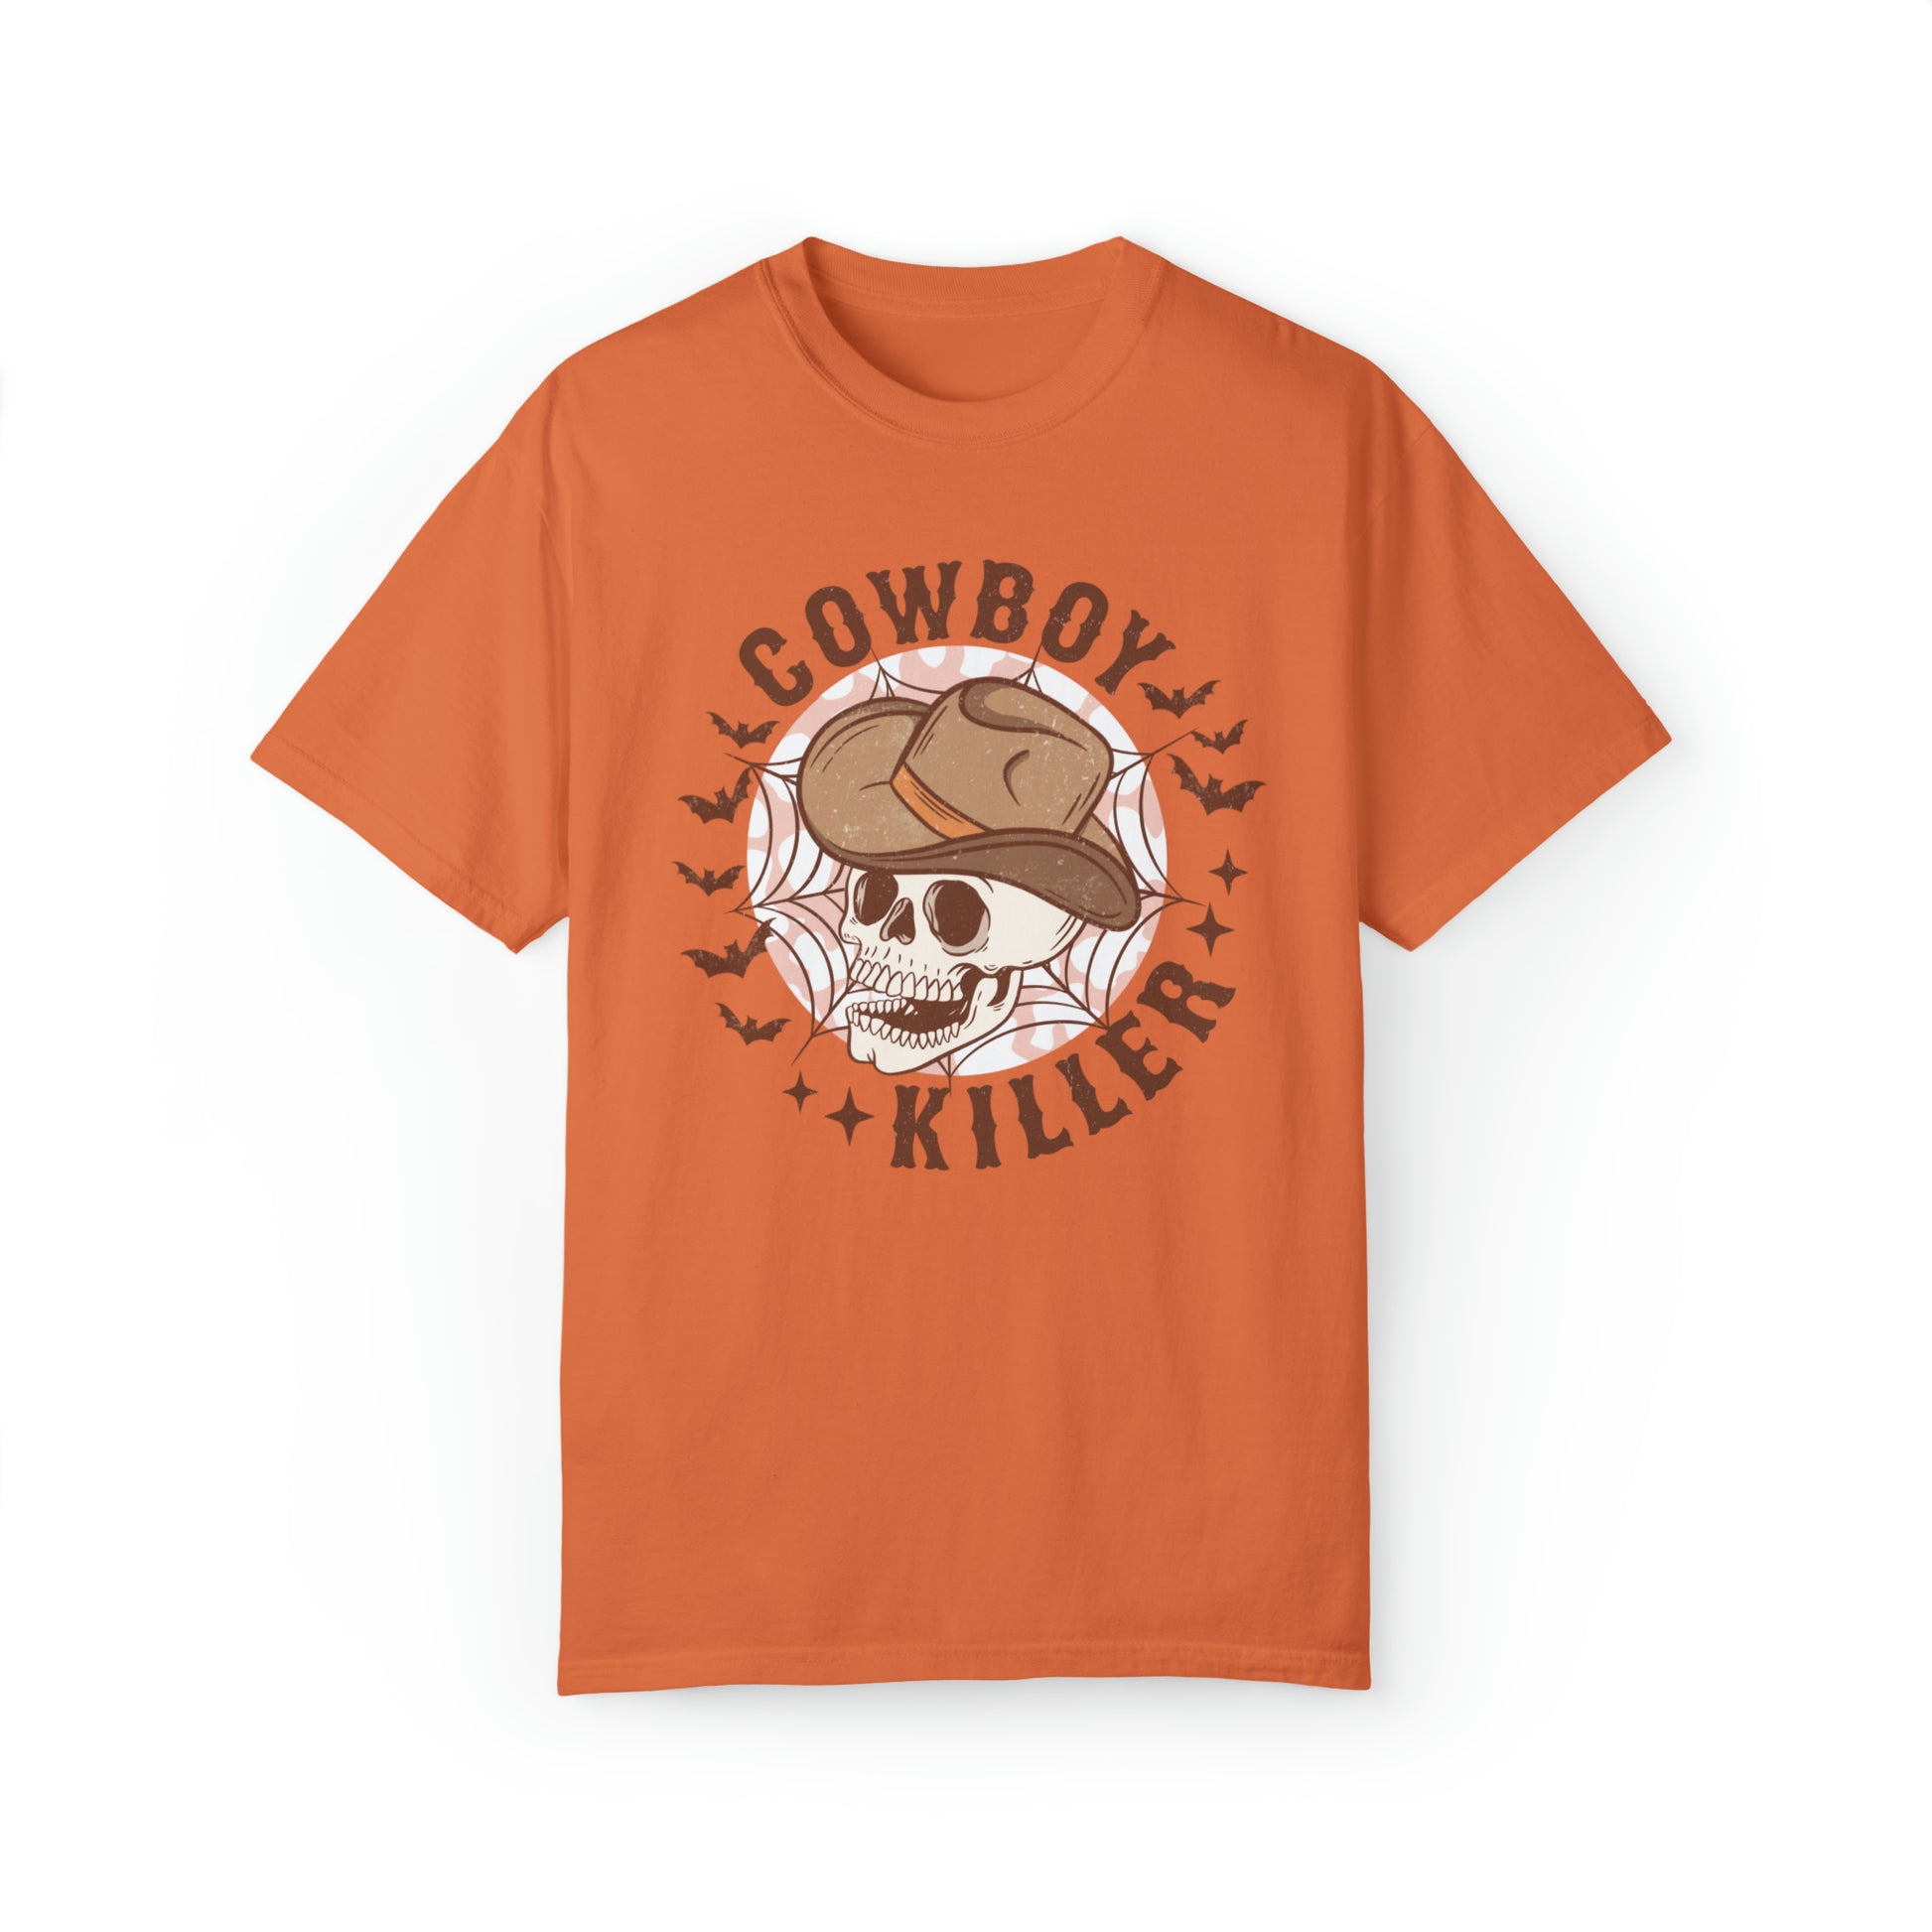 Cowboy Killer, Comfort Colors Halloween Shirt